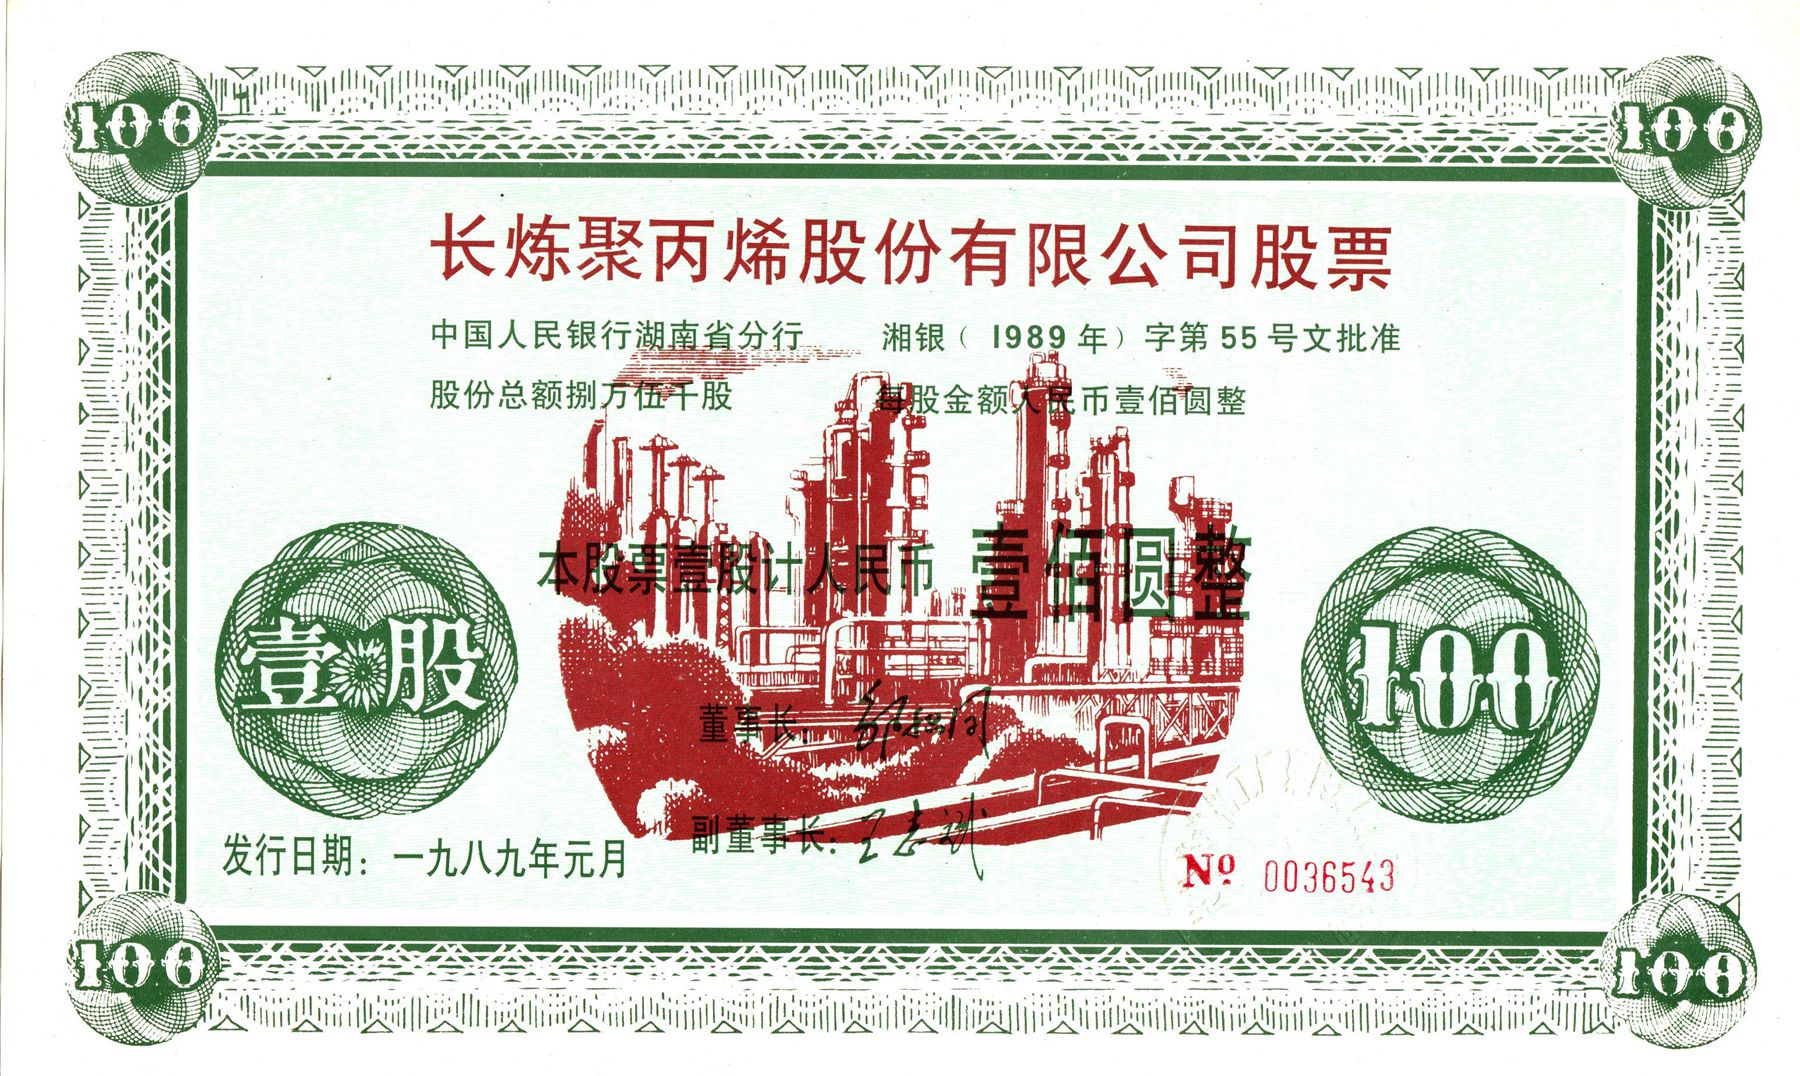 S3097, Chang-Lian Polypropylene Co., One Share Stock Certificate, 1989 China